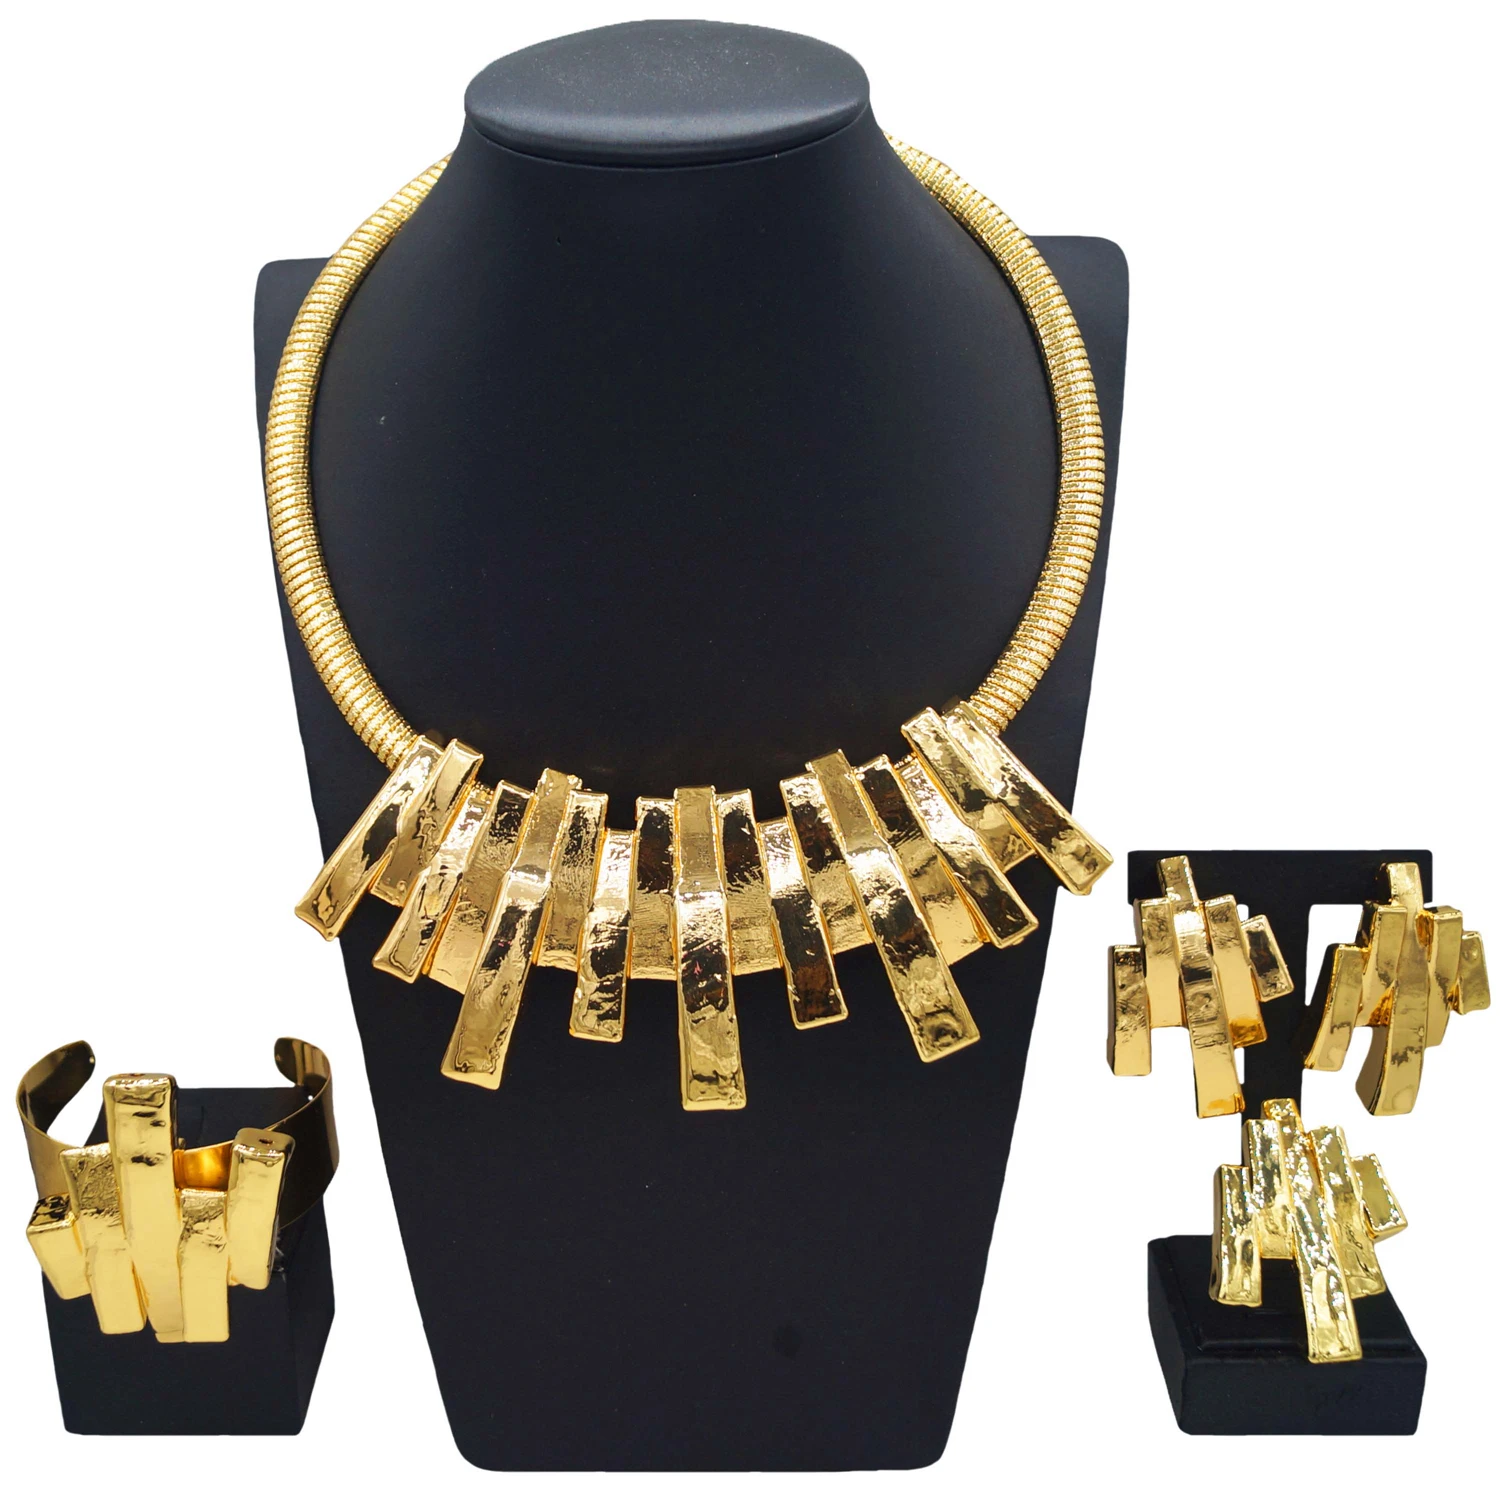 

Yulaili hot selling charm women's jewelry 4-piece set Dubai 24K gold plated exquisite elegant bracelet earrings engagement ring